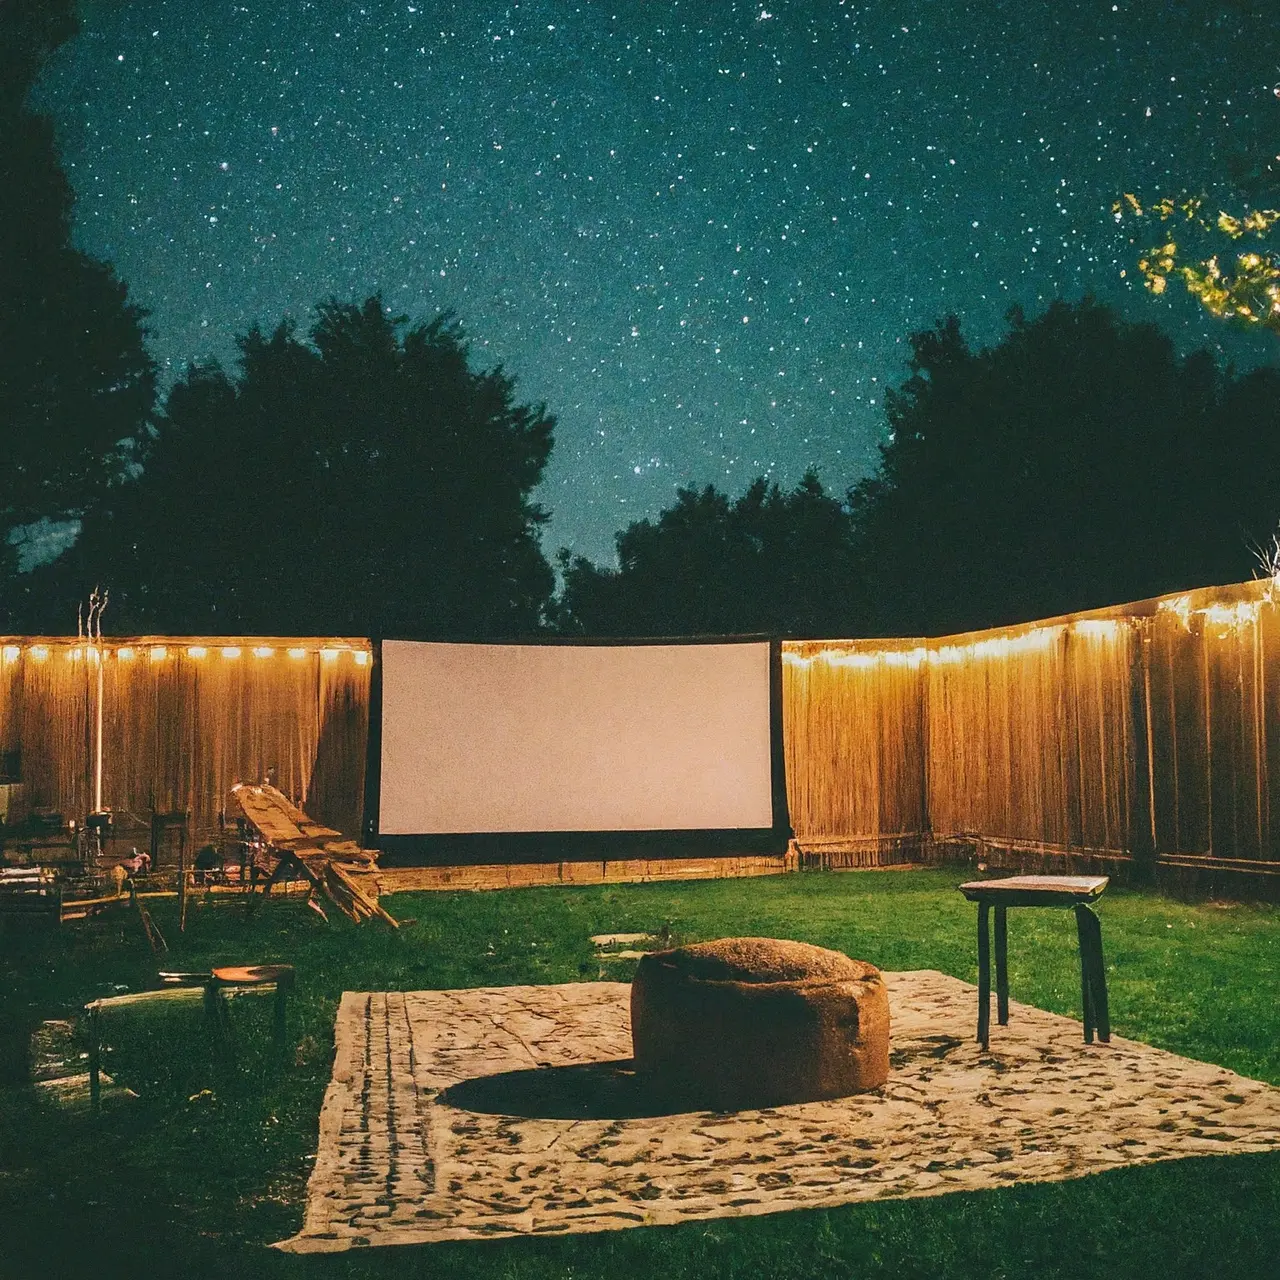 A backyard home theater setup under the stars. 35mm stock photo